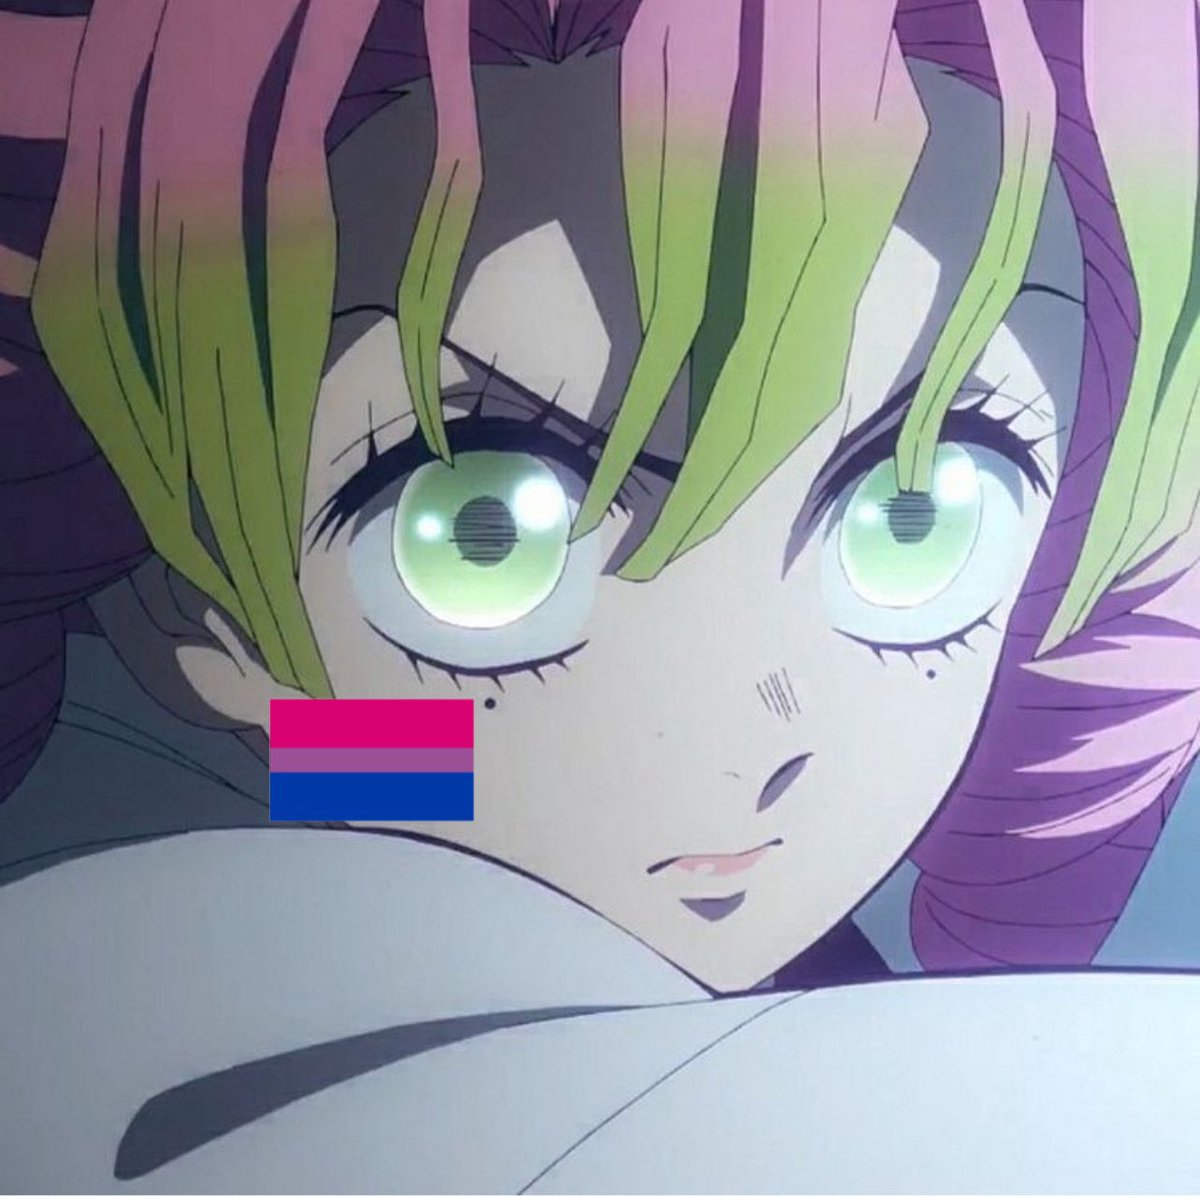 mitsuri kanroji from demon slayer is bisexual! (implied/canon?)